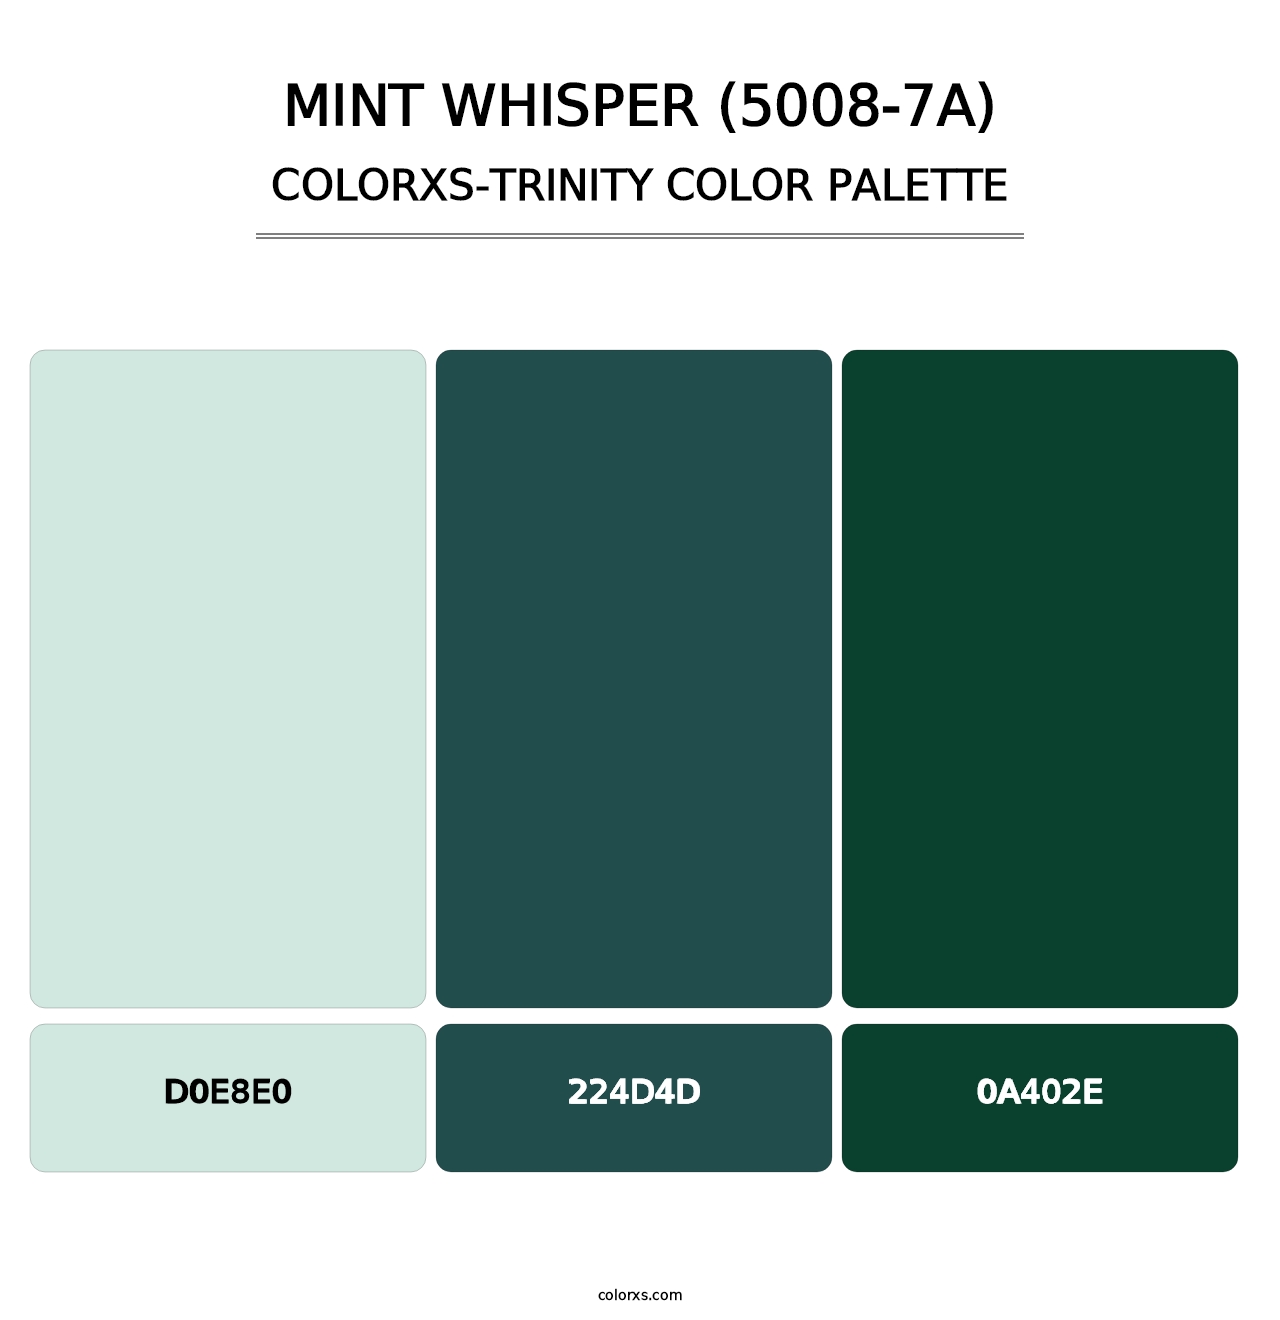 Mint Whisper (5008-7A) - Colorxs Trinity Palette